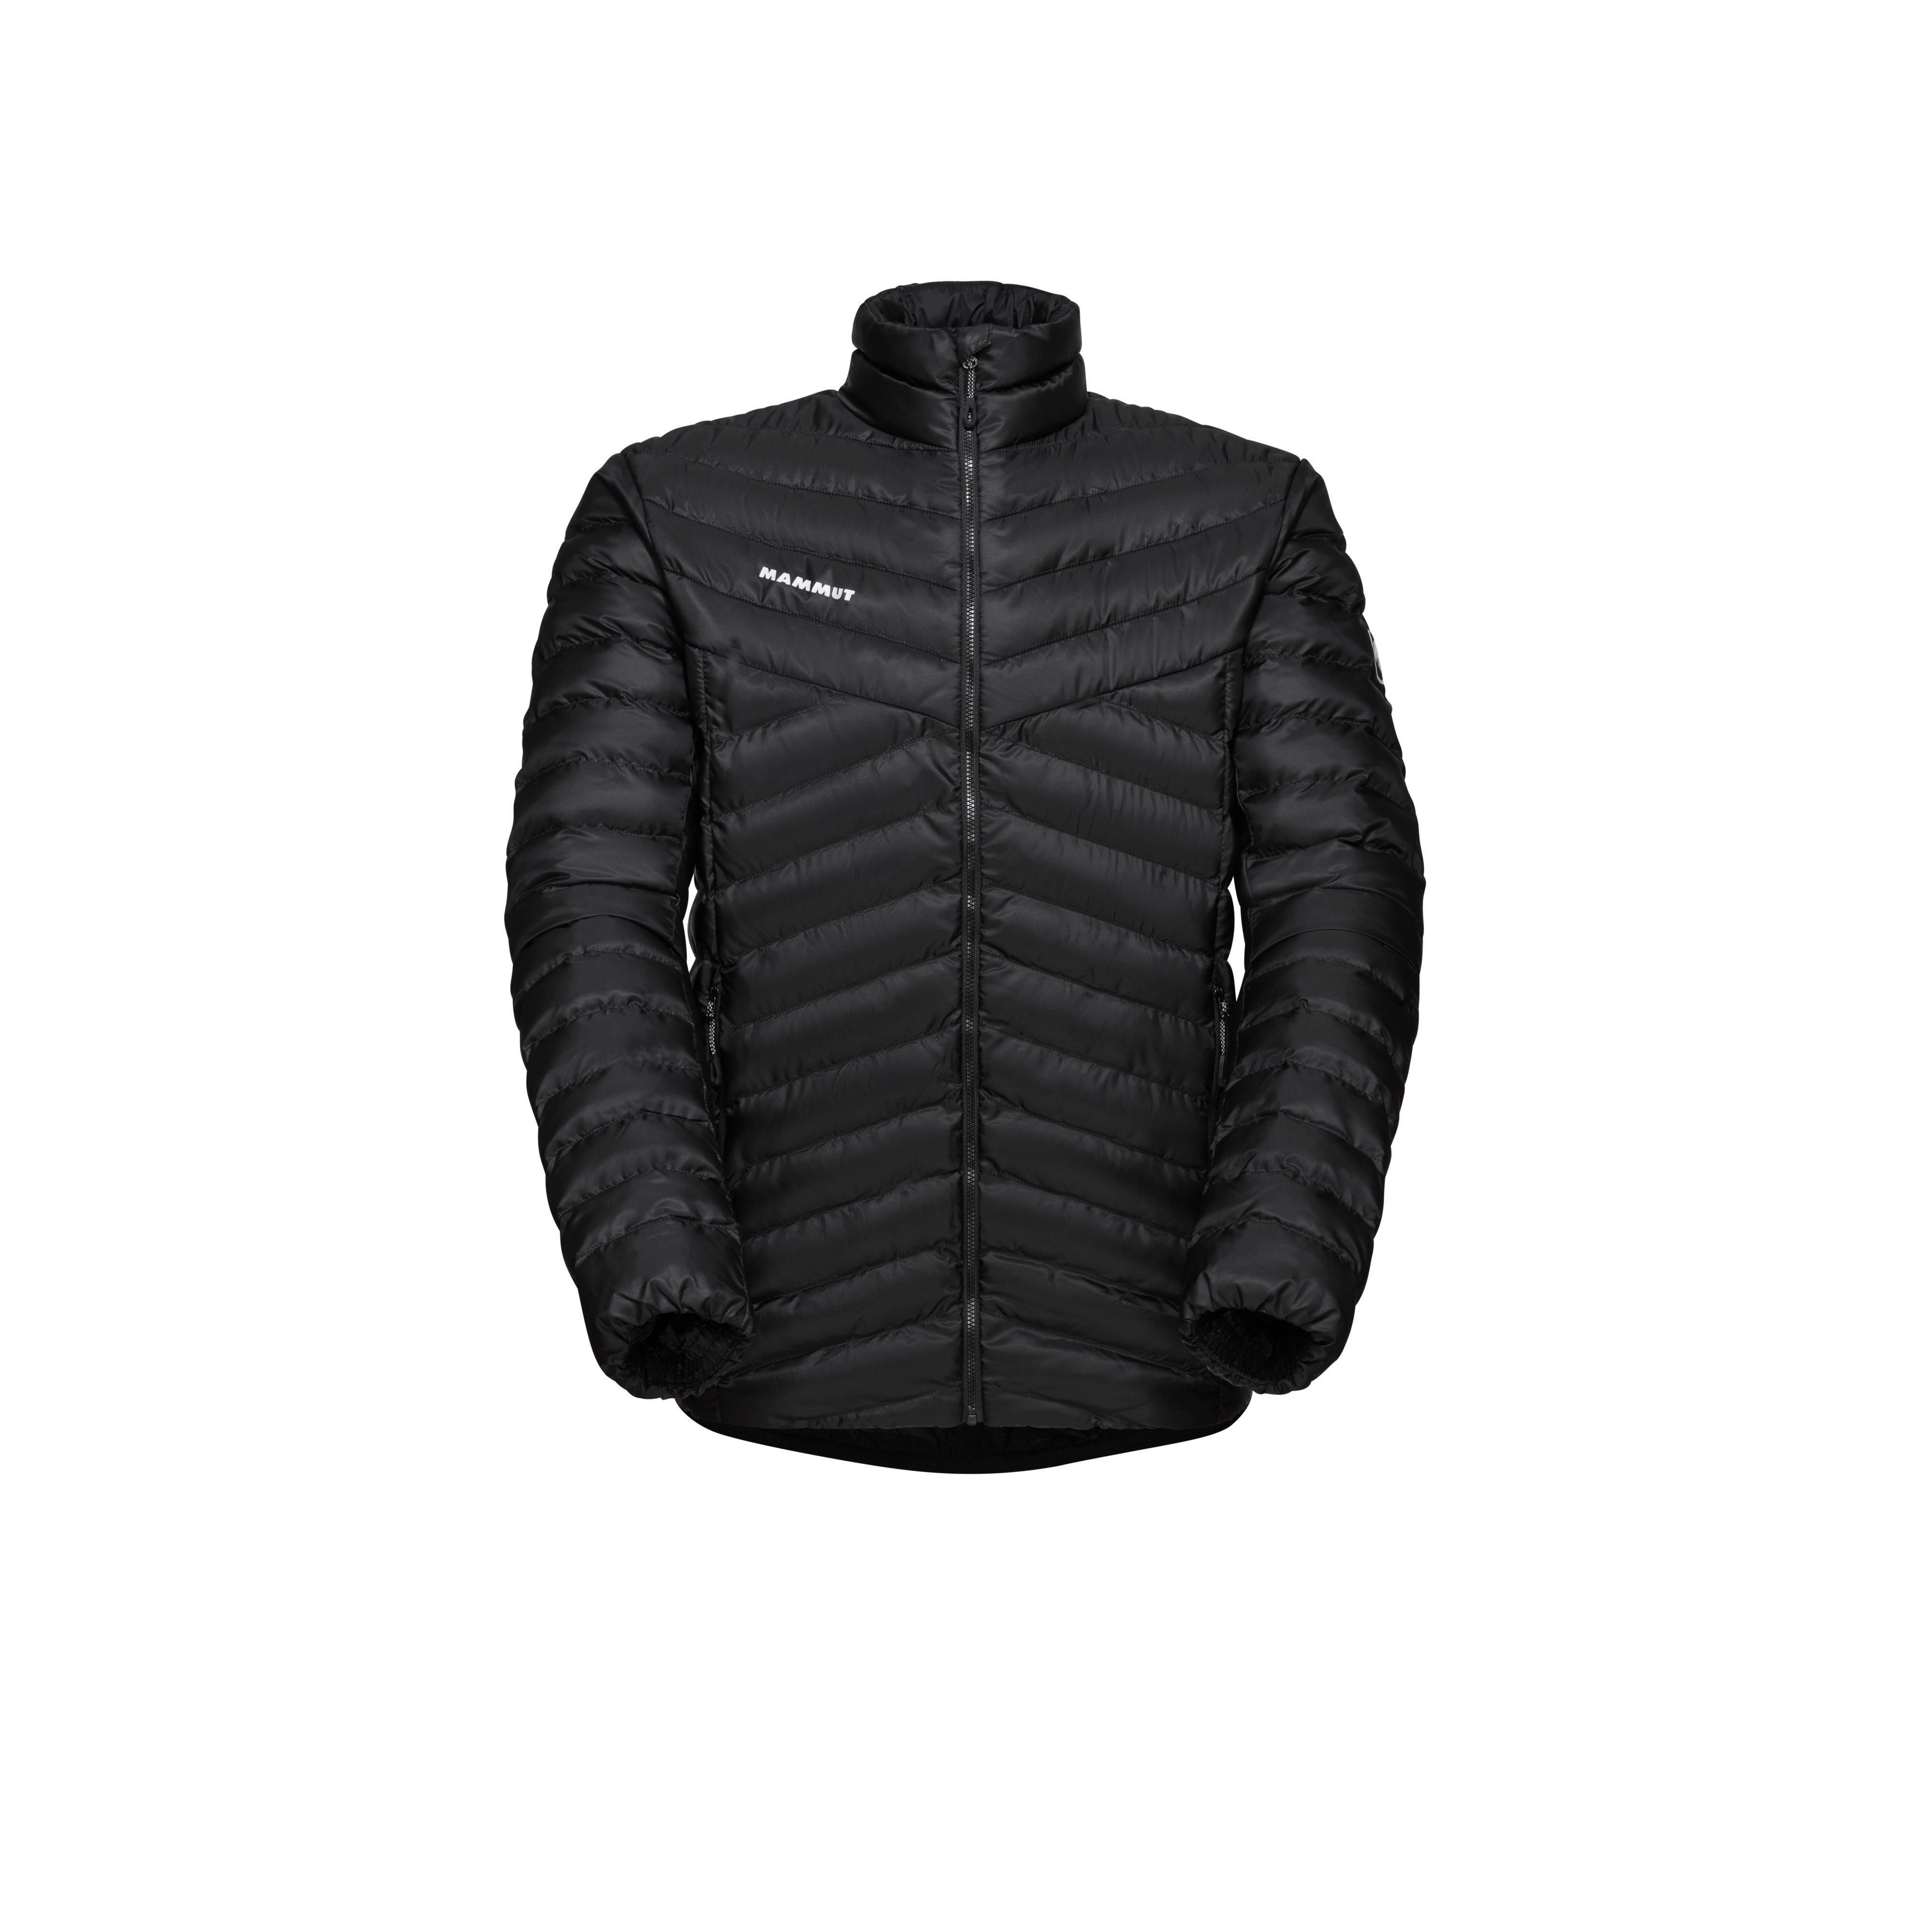 Albula IN Jacket Men - black, XXL product image